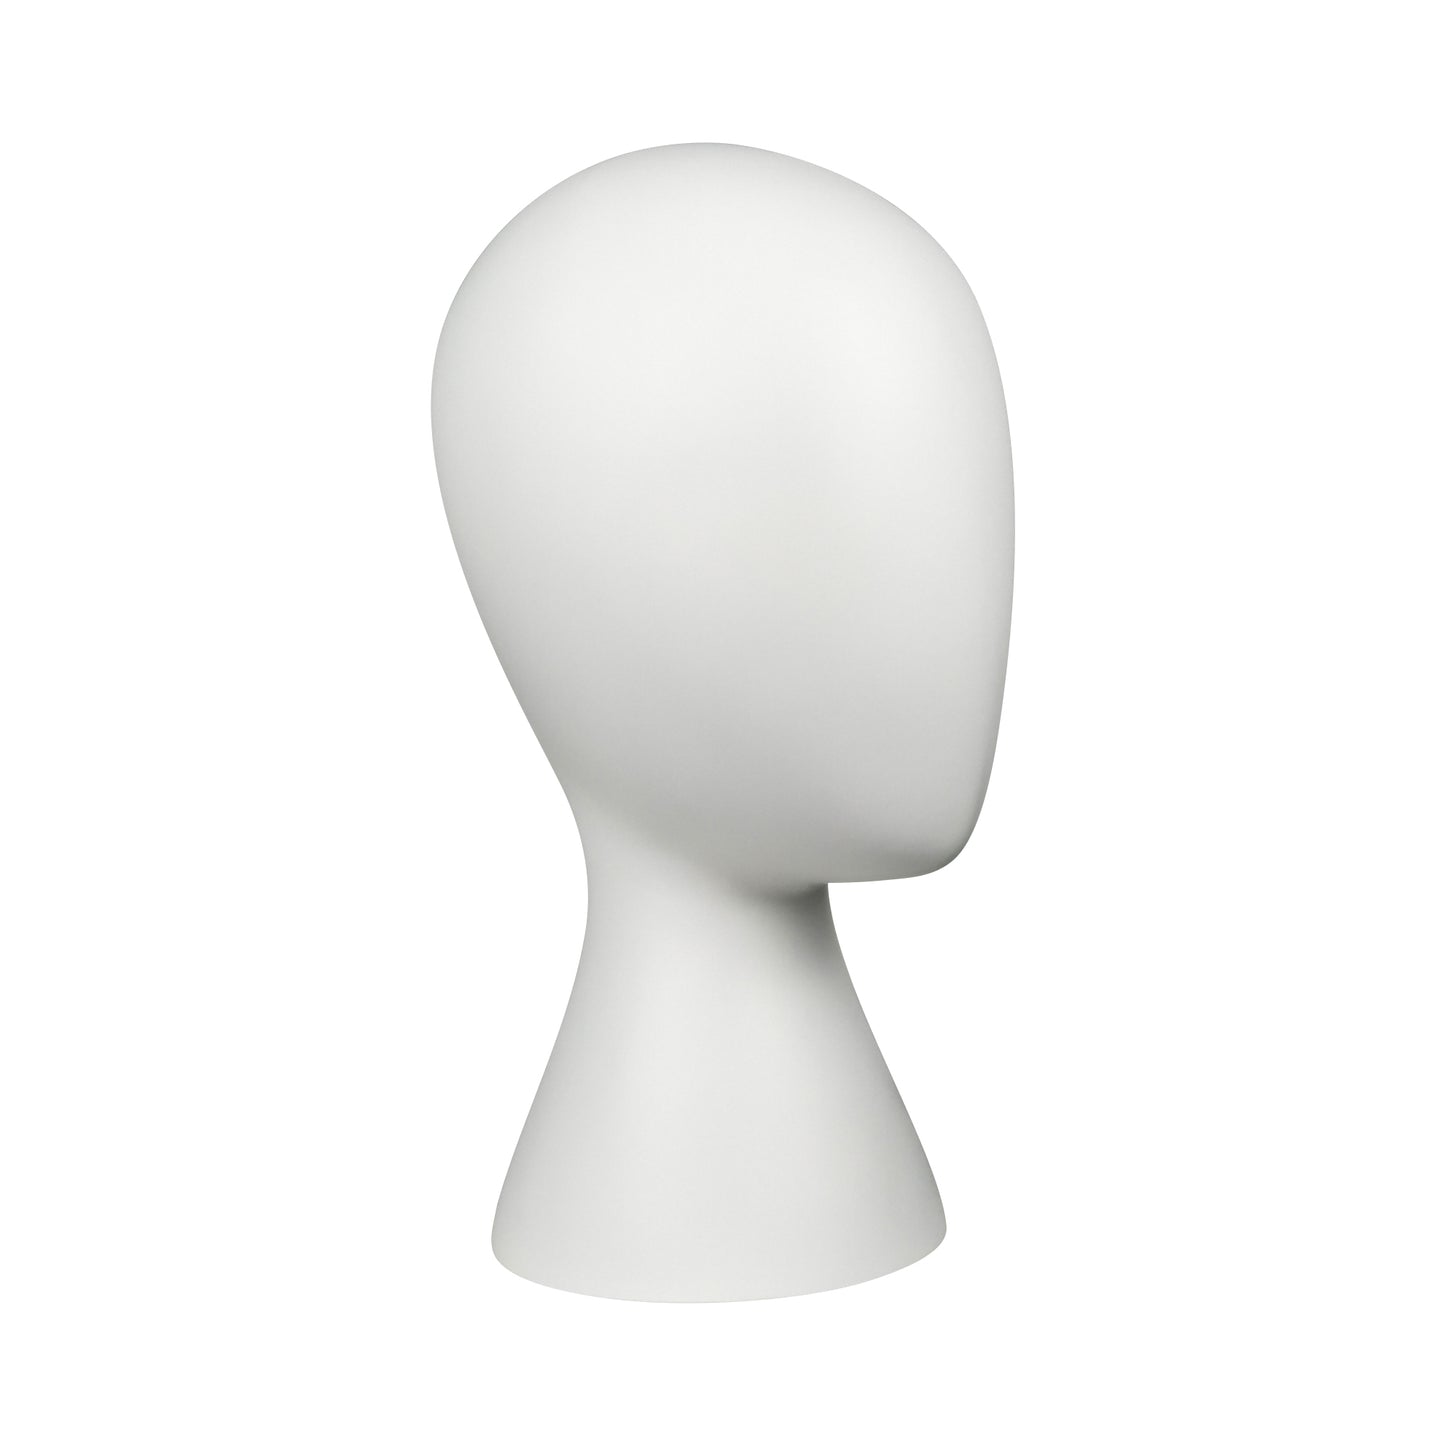 White Female Wig Mannequin Head Stand,Hair Mannequin Head Display,Hat Display Head Dummy,Manikin Head Model,Fashion Head Props